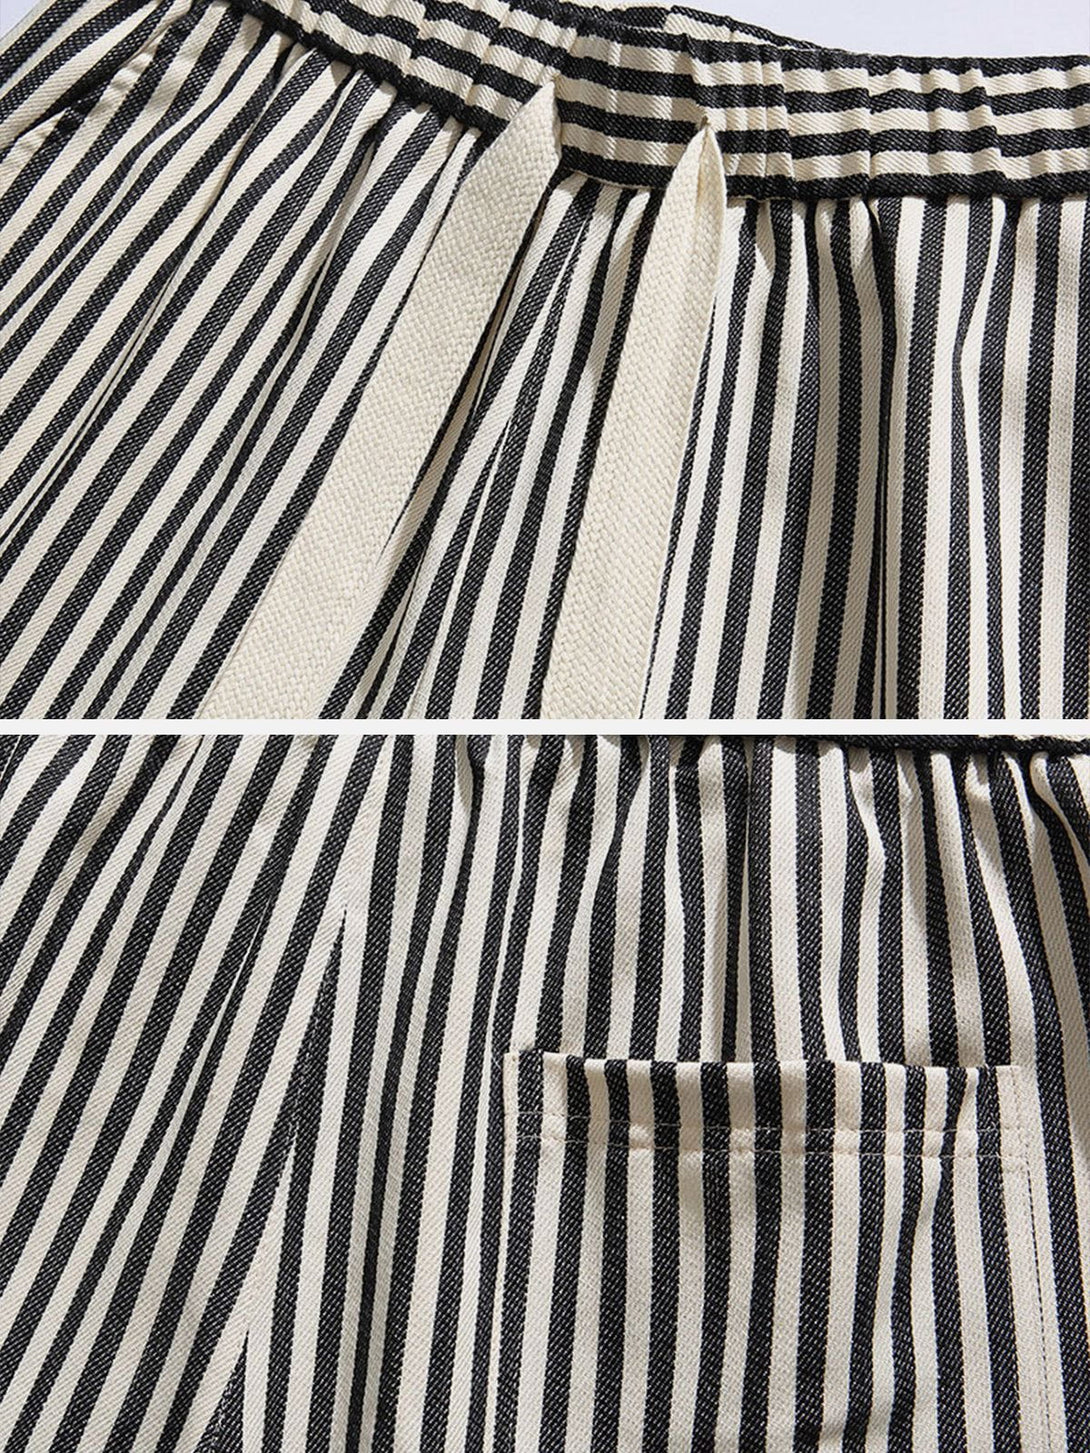 Majesda® - Striped Print Loose Drawstring Shorts outfit ideas streetwear fashion